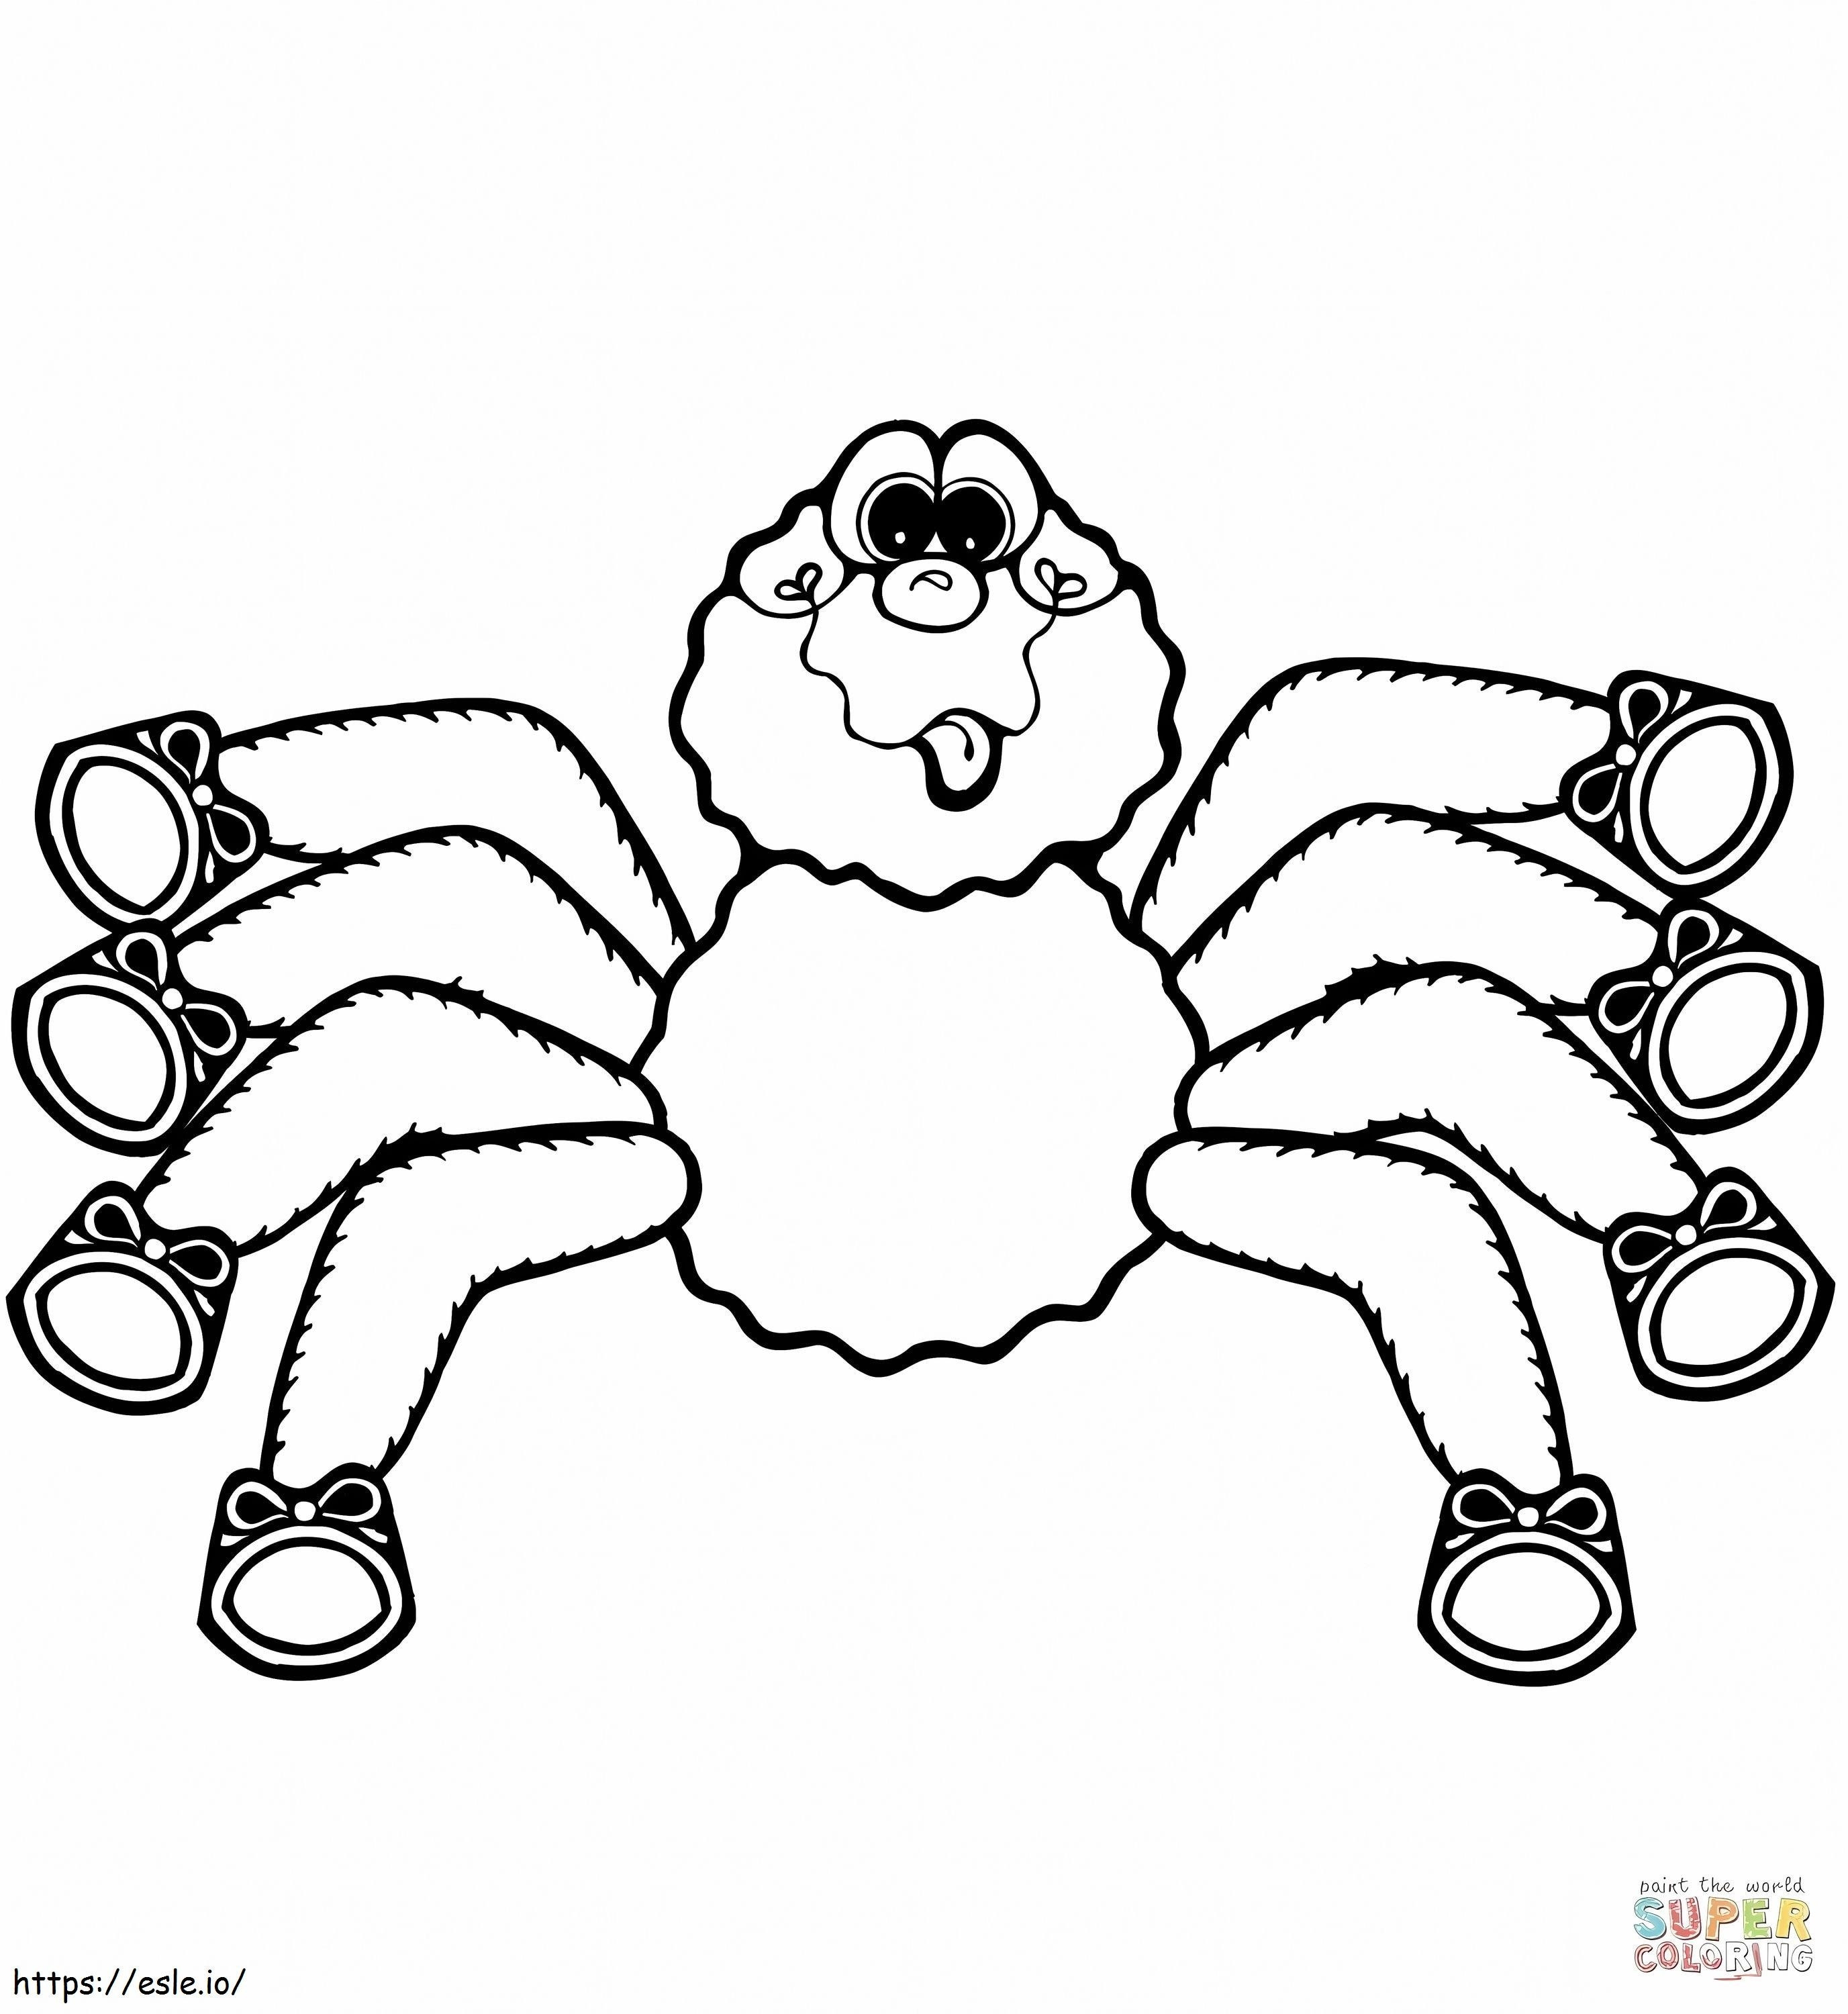 1545183164_Cartoon Spider 1 coloring page